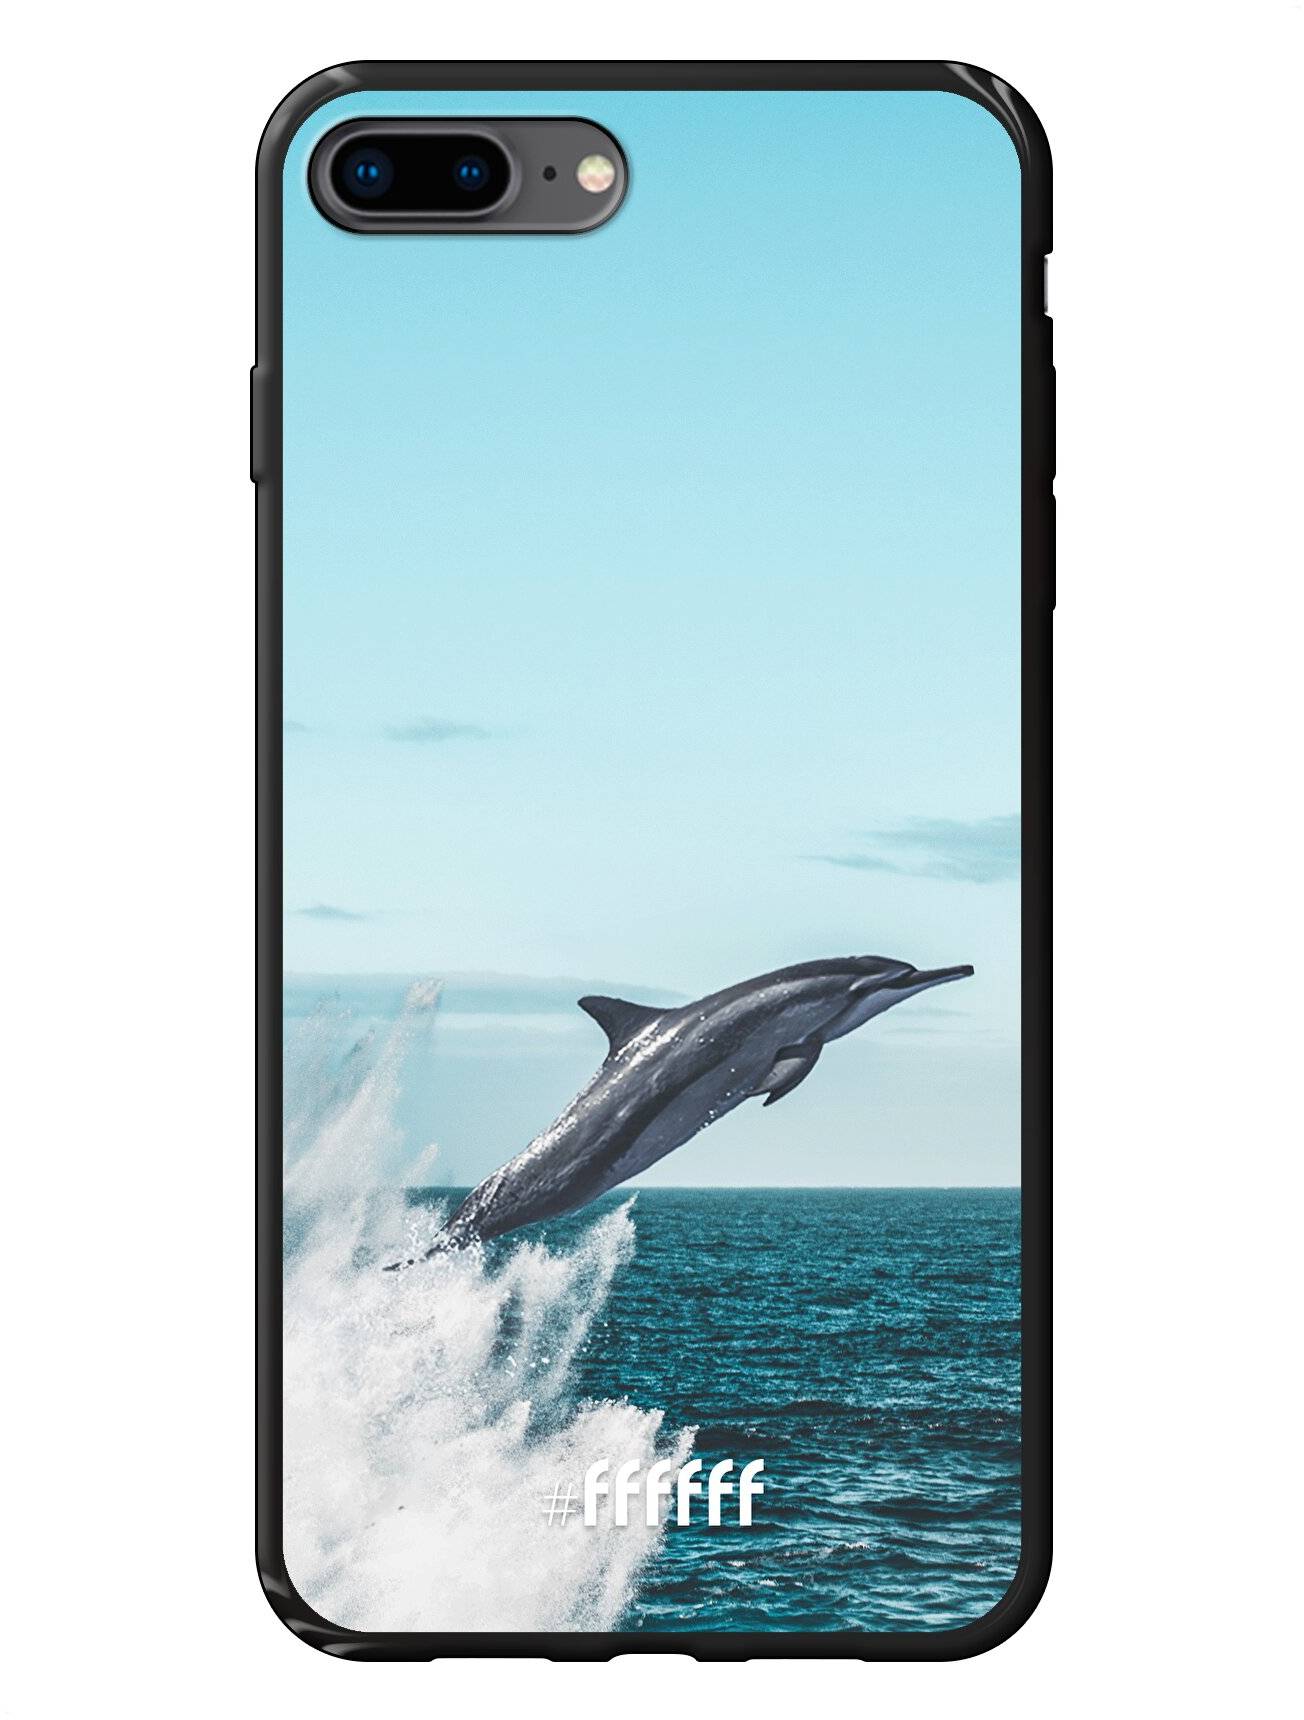 Dolphin iPhone 8 Plus